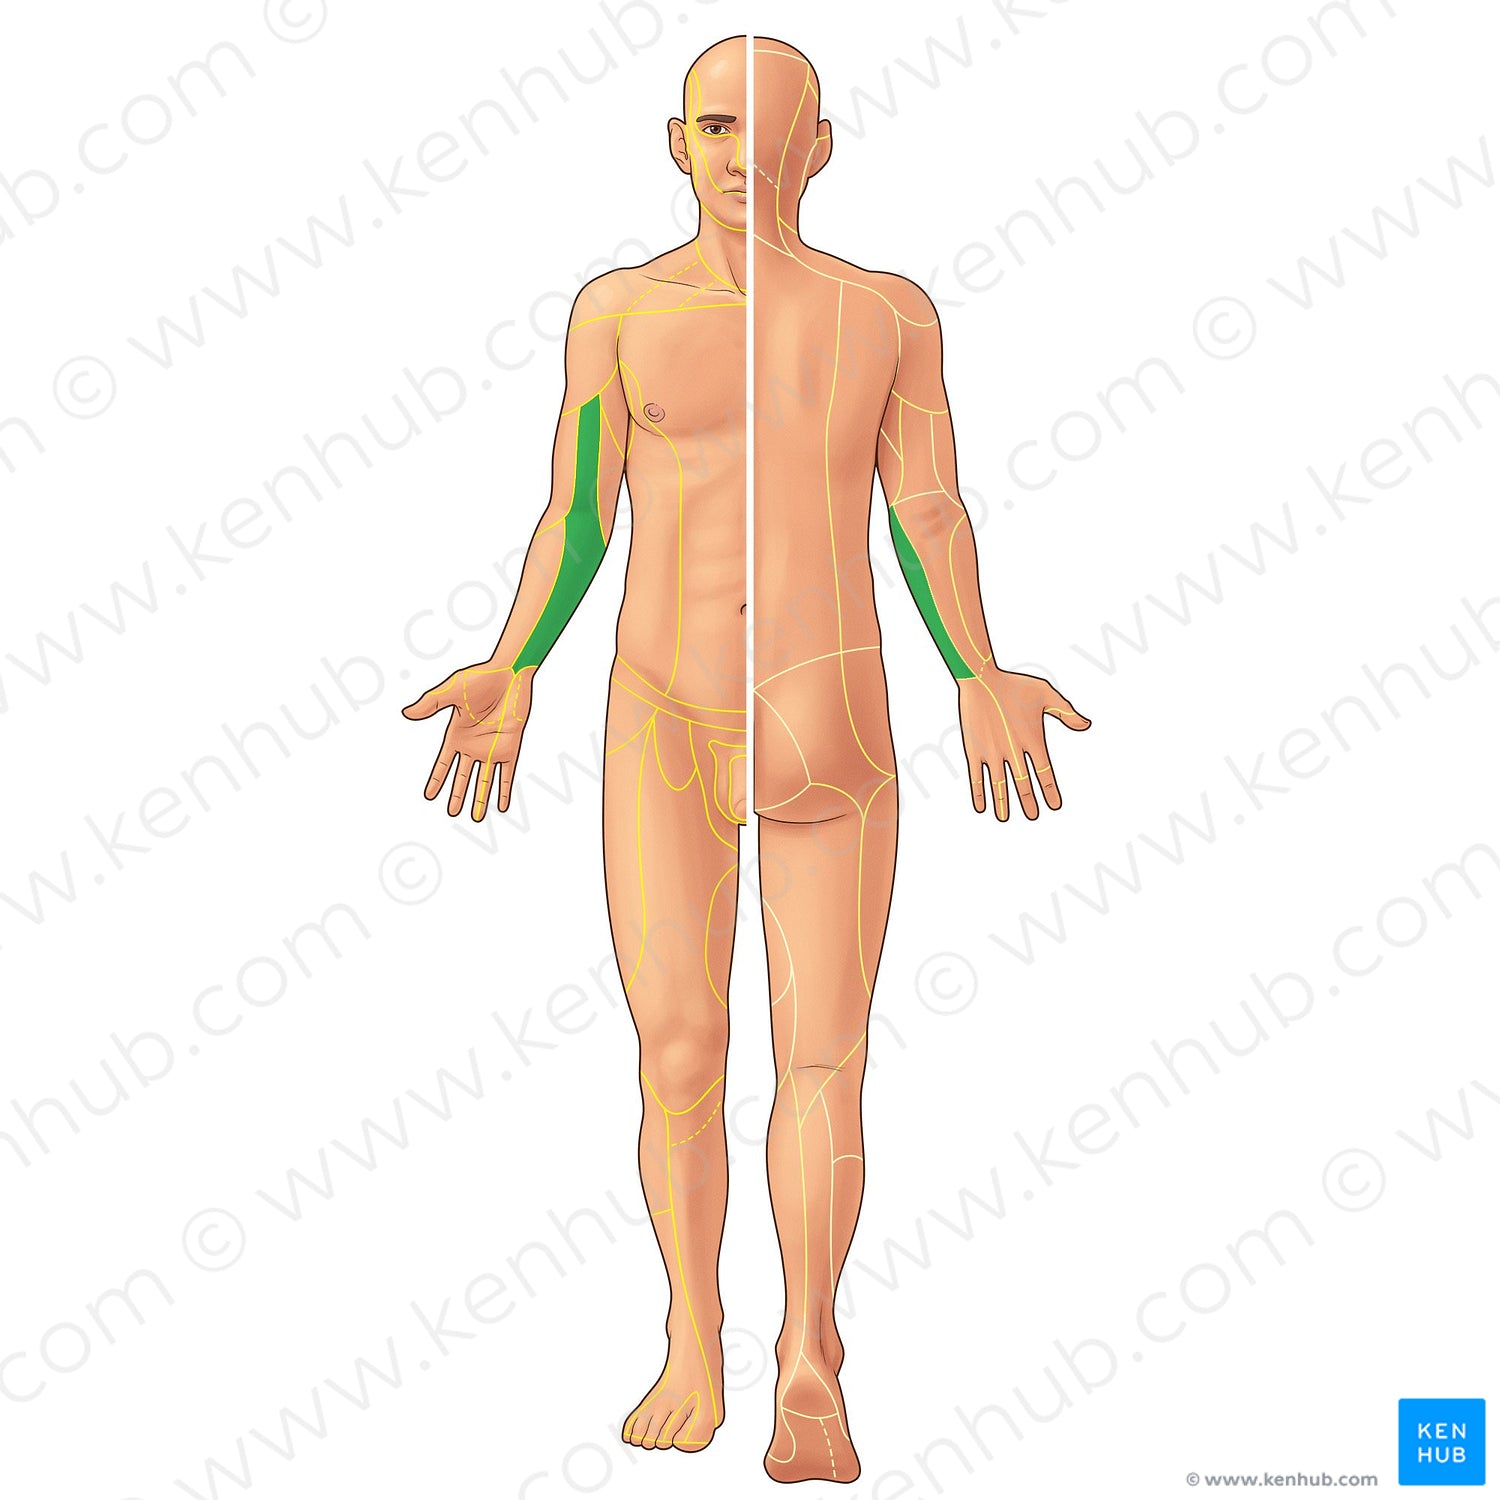 Medial antebrachial cutaneous nerve (#21914)